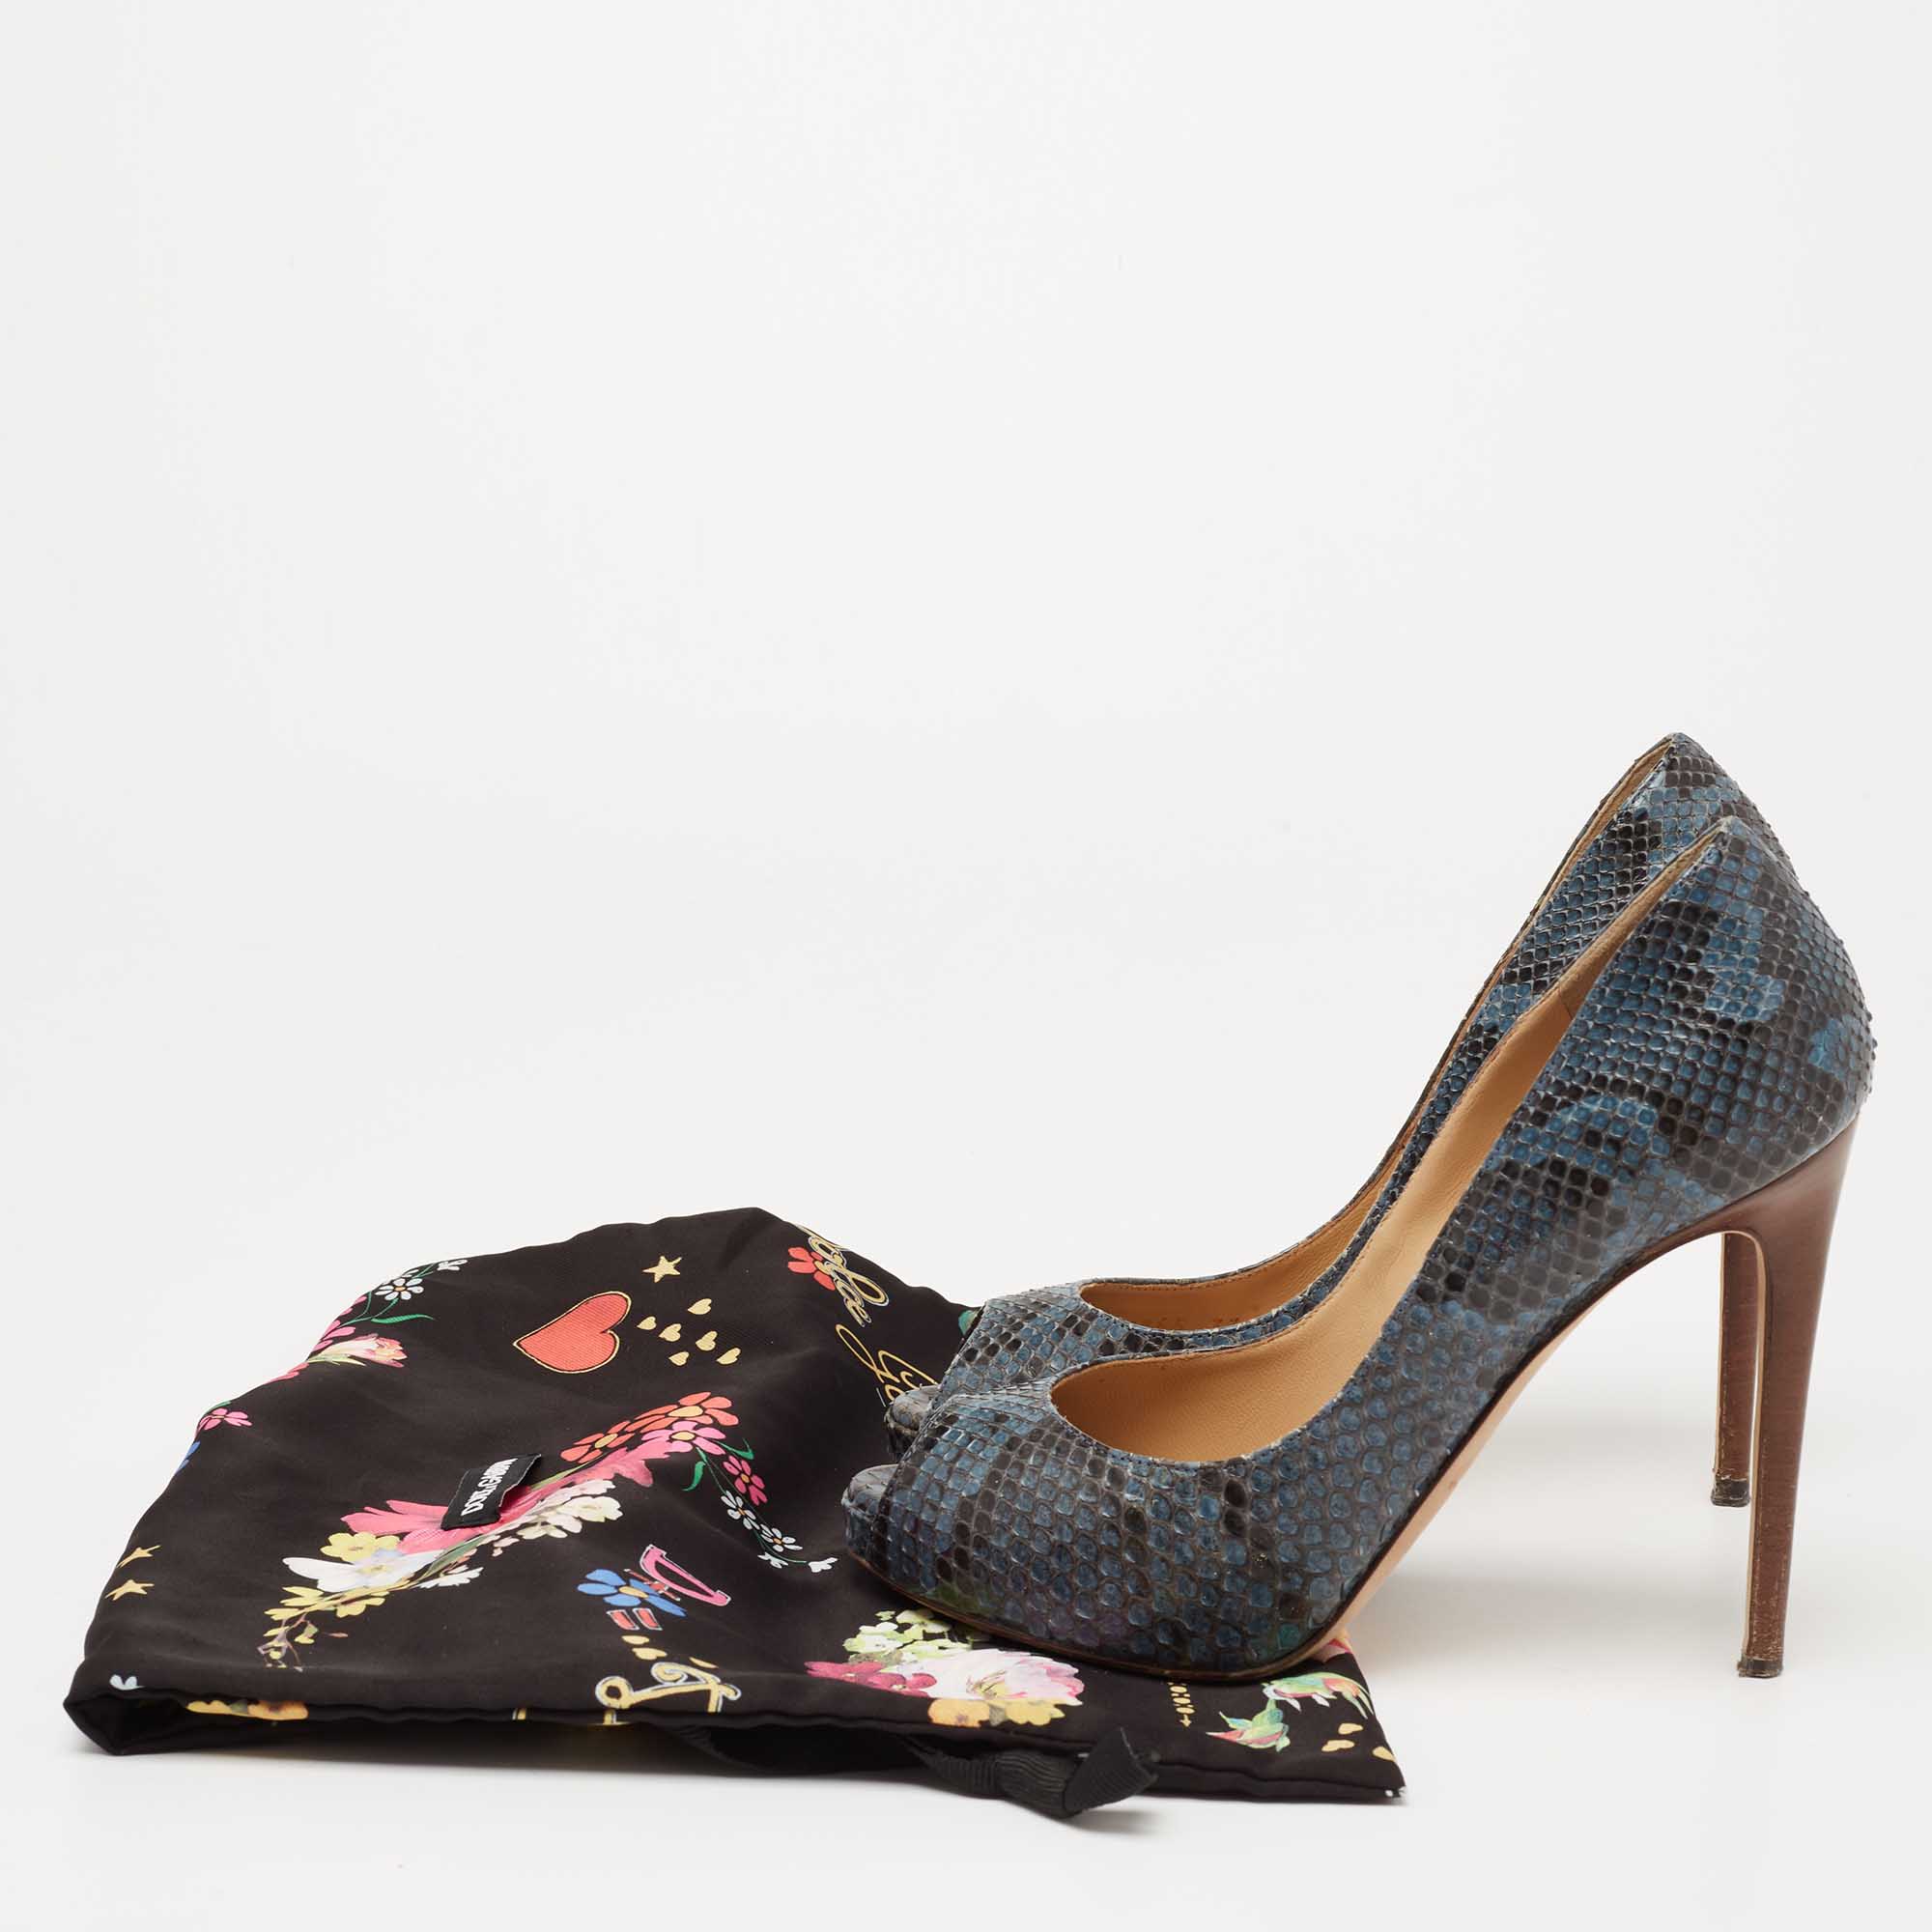 Dolce & Gabbana Blue/Black Python Leather Peep-Toe Pumps Size 37